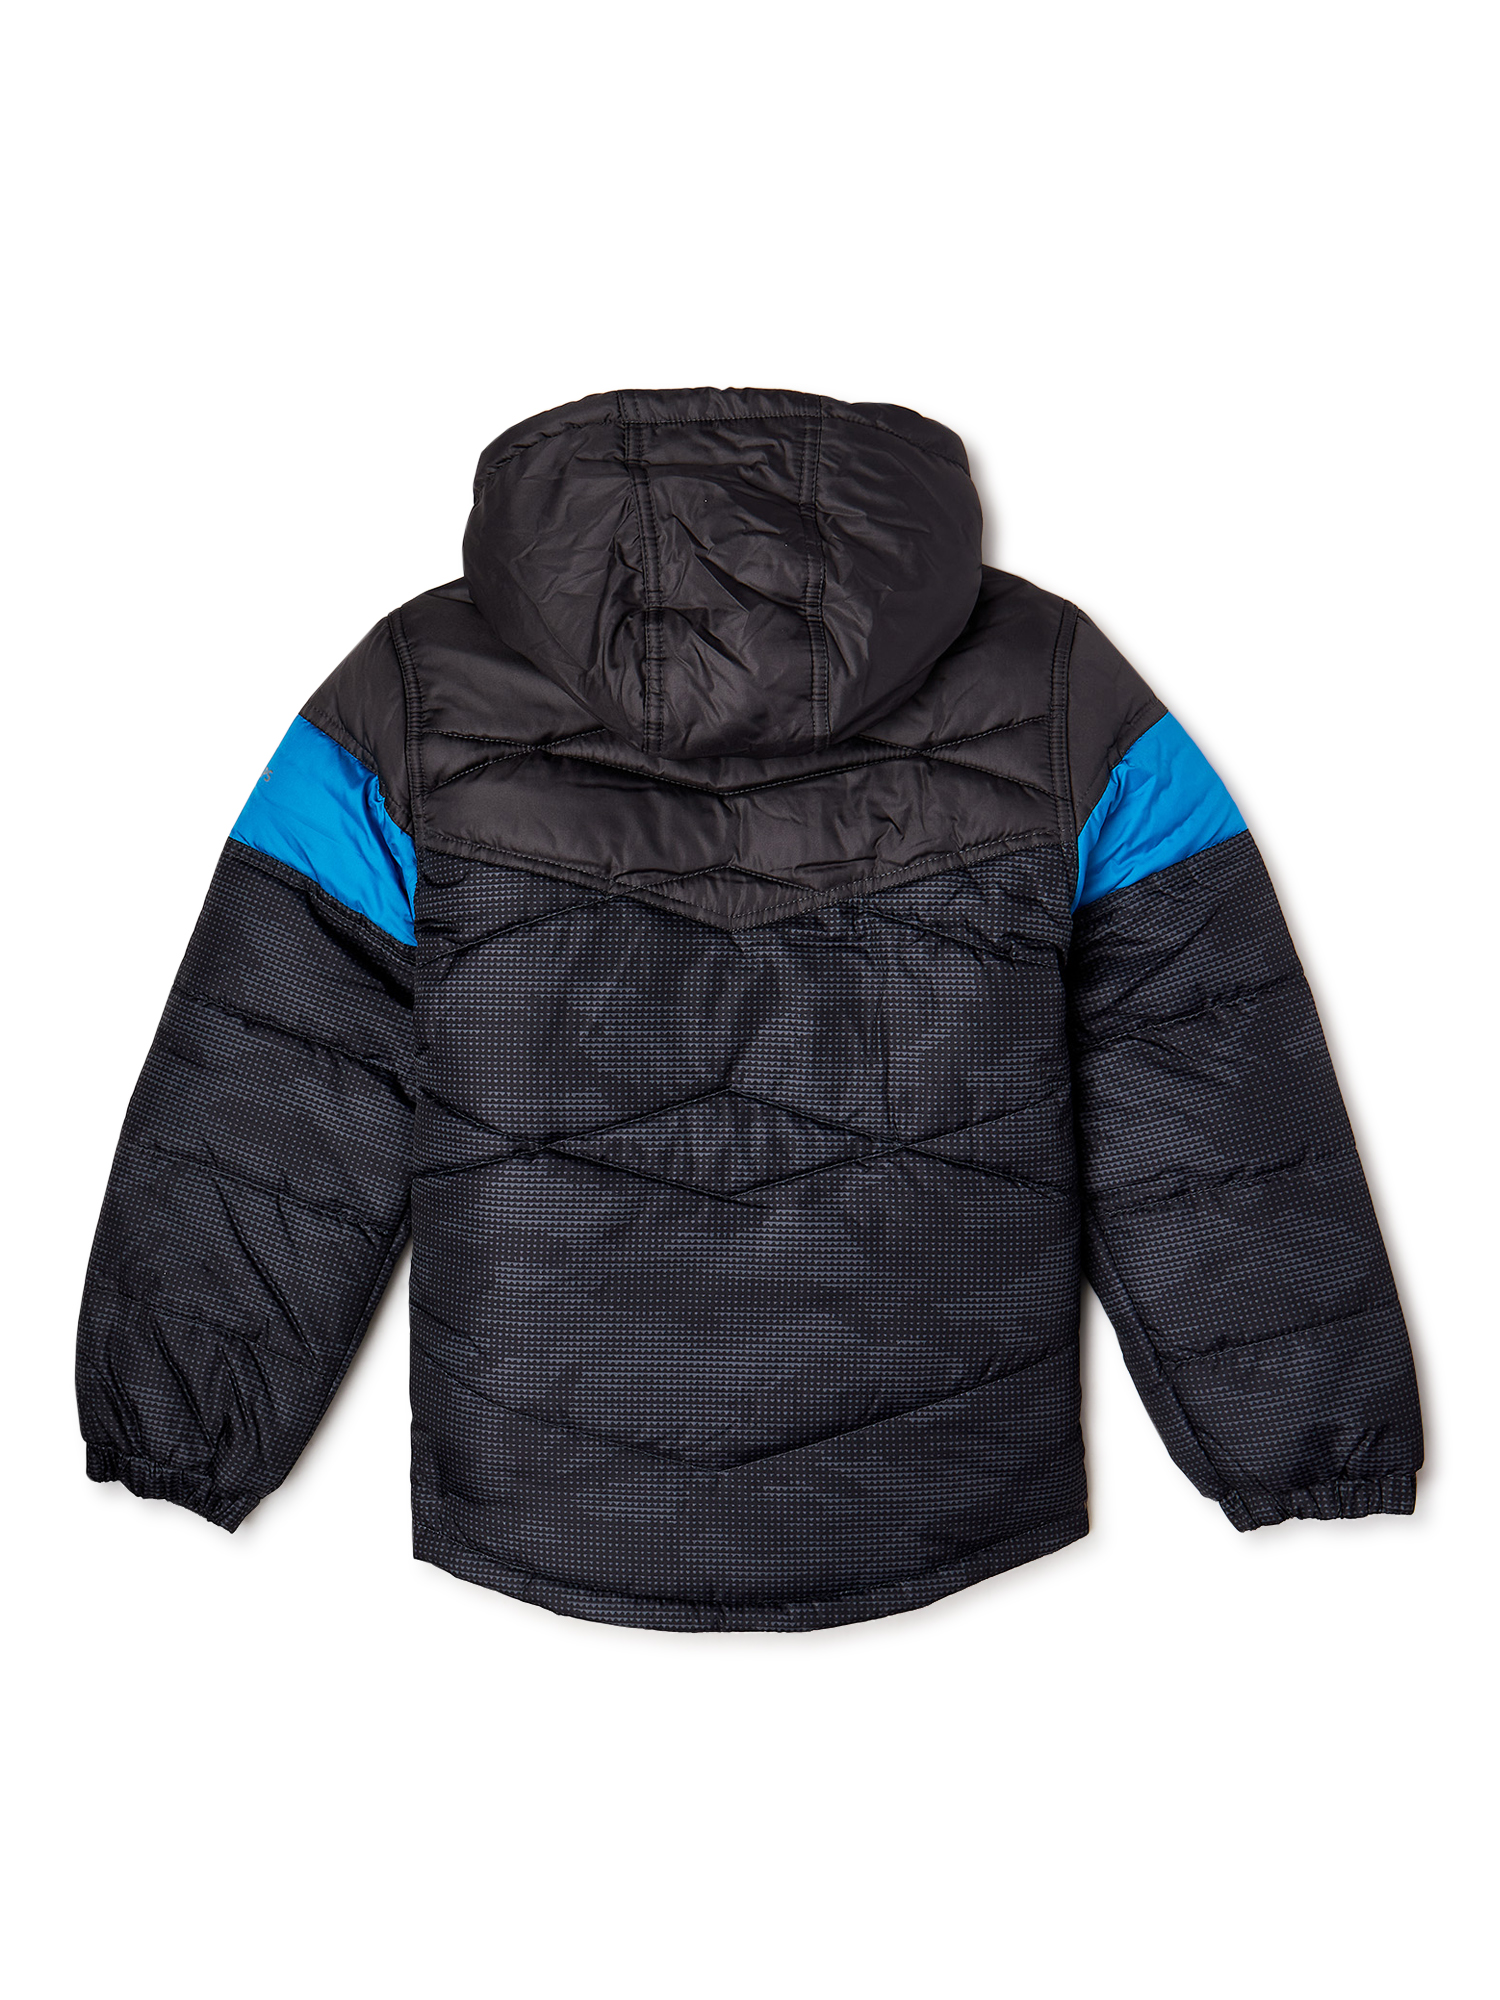 Swiss Alps Boys Camo Illusion Puffer Jacket, Sizes 4-16 - image 2 of 3